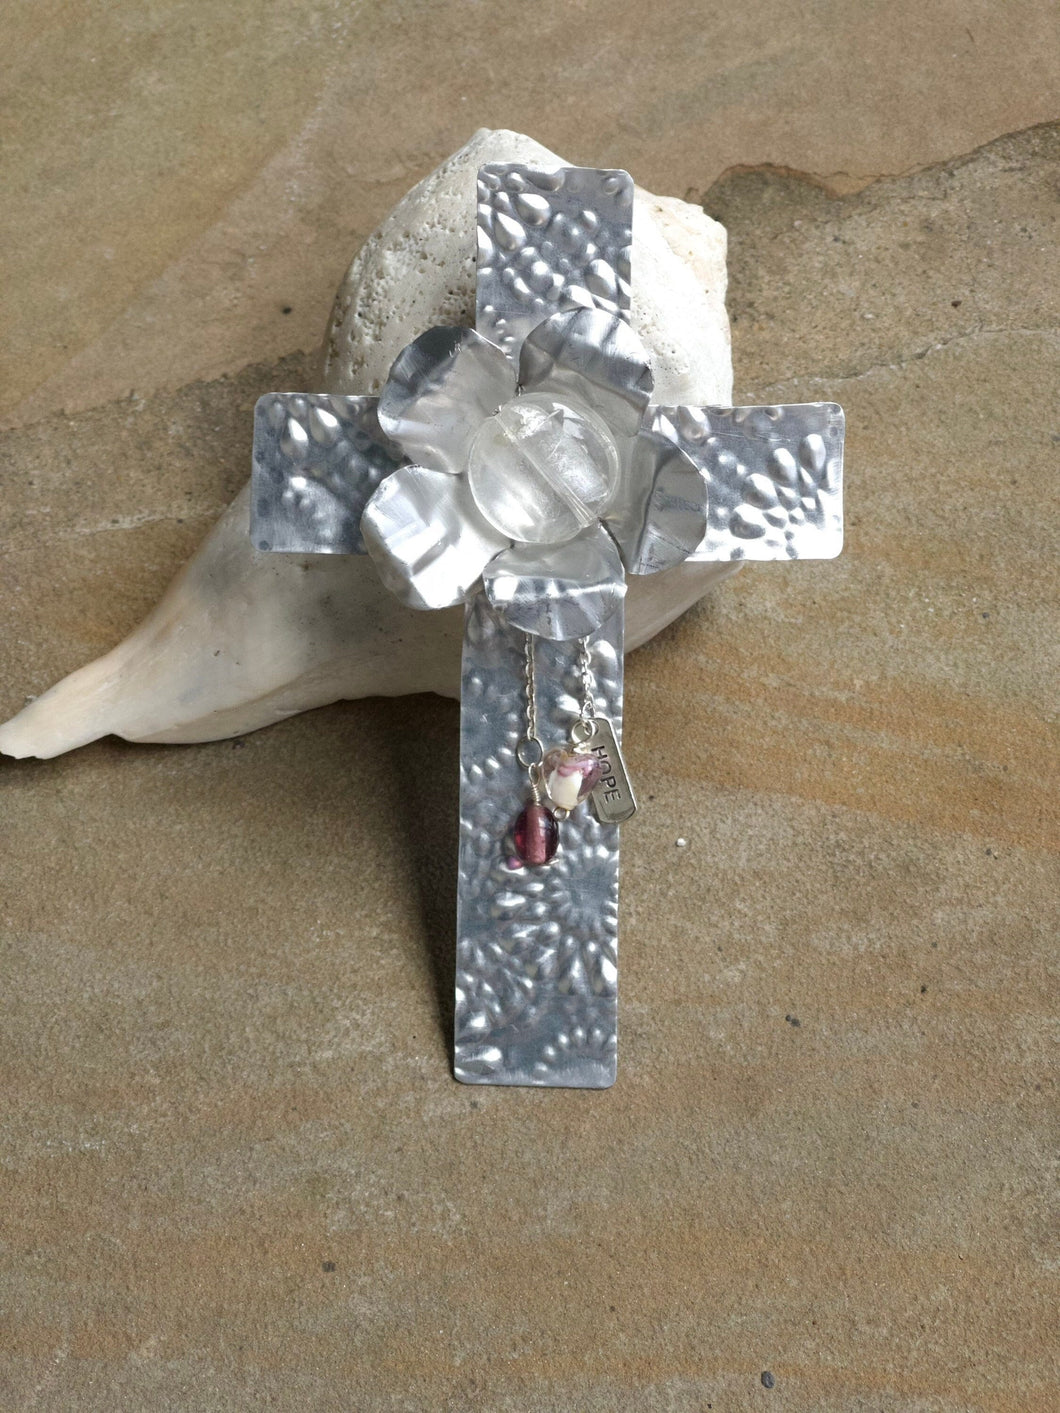 Silver Cross/Religious Gift/Cross/Unique Cross/Decorative Cross/Embossed Cross/Christian Gift/Hanging Cross/Desktop Cross/Youth Pastor Gift